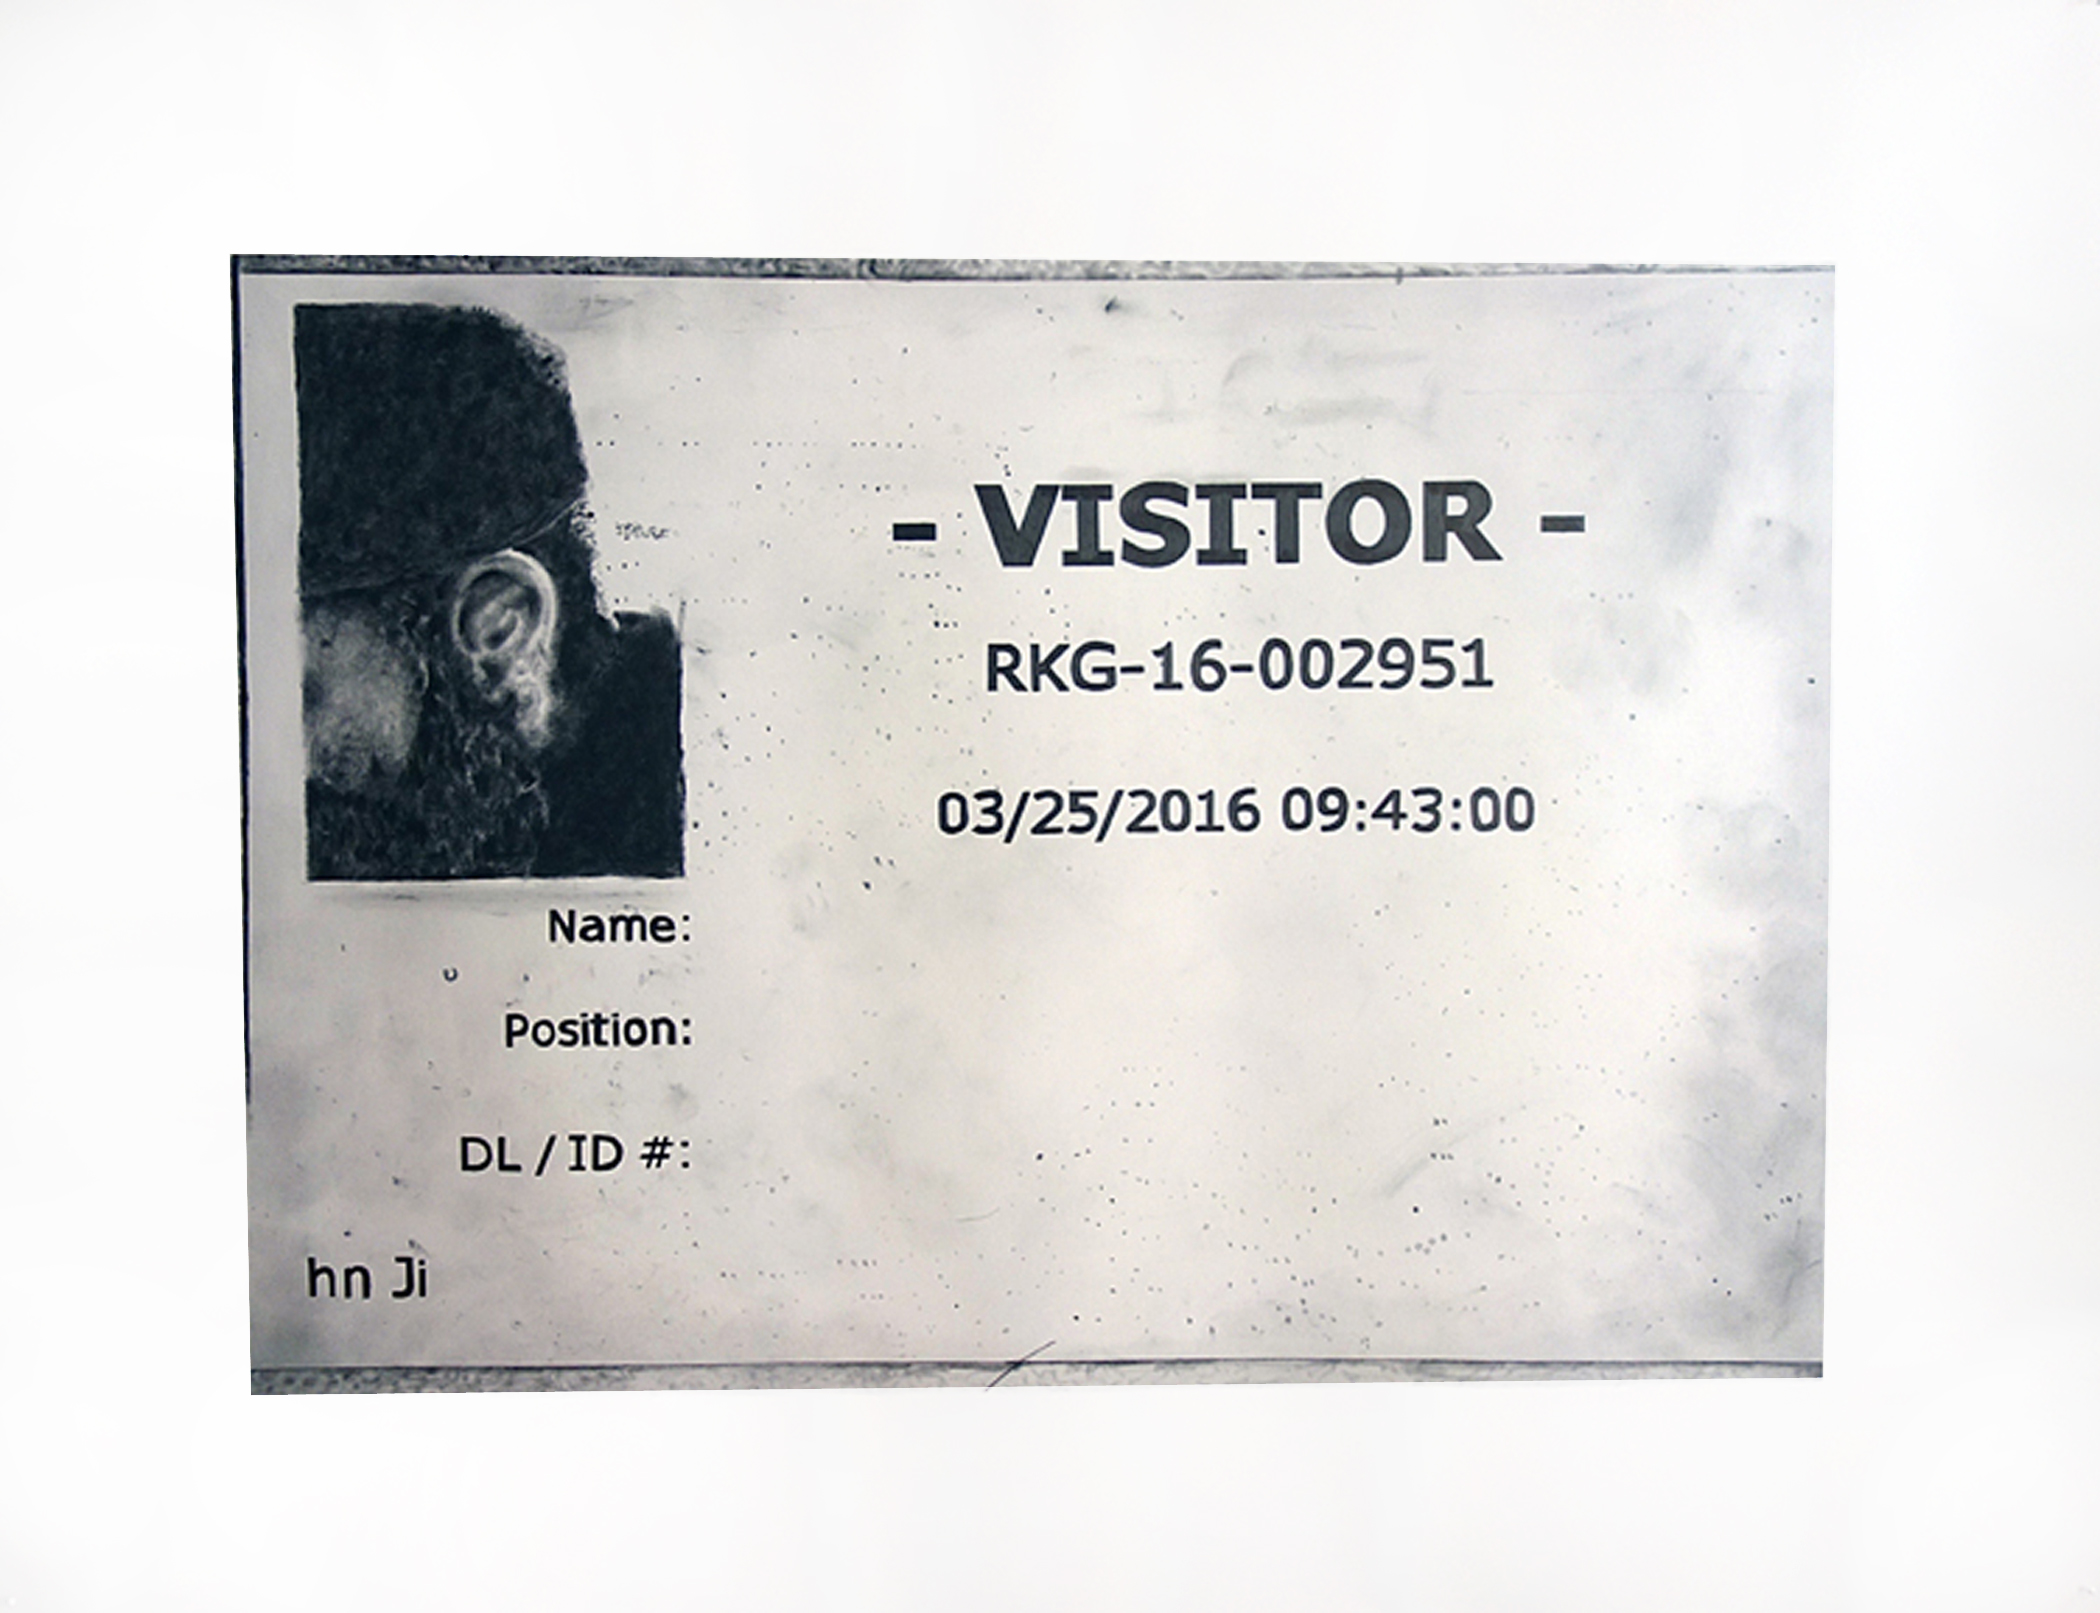 Visitor (2)